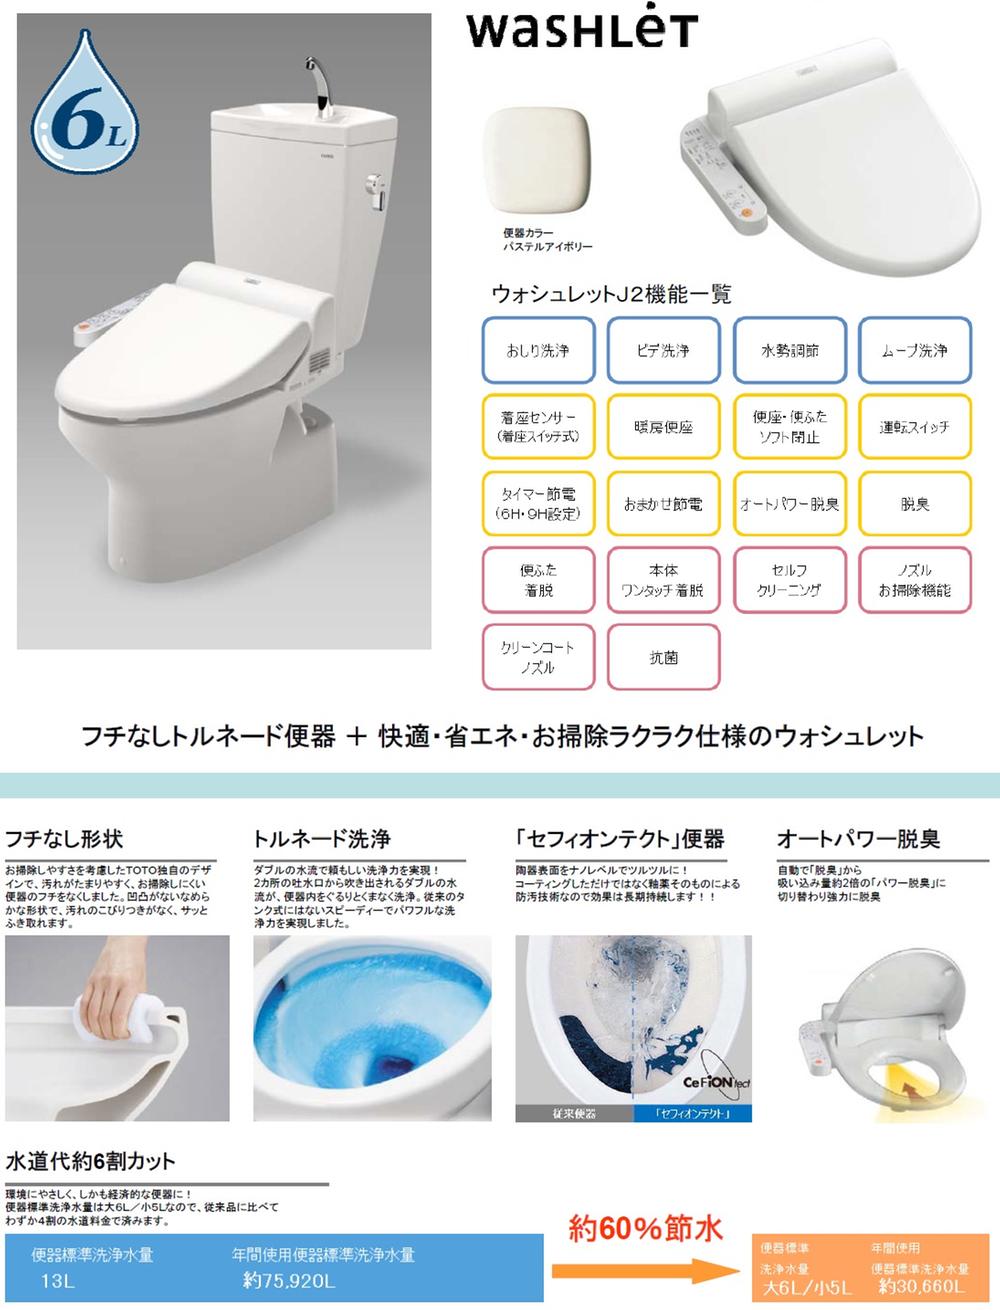 Other Equipment. 1 ・ Second floor toilet Bidet ・ Warm Rhett ・ Handrail equipped! Water-saving type! 